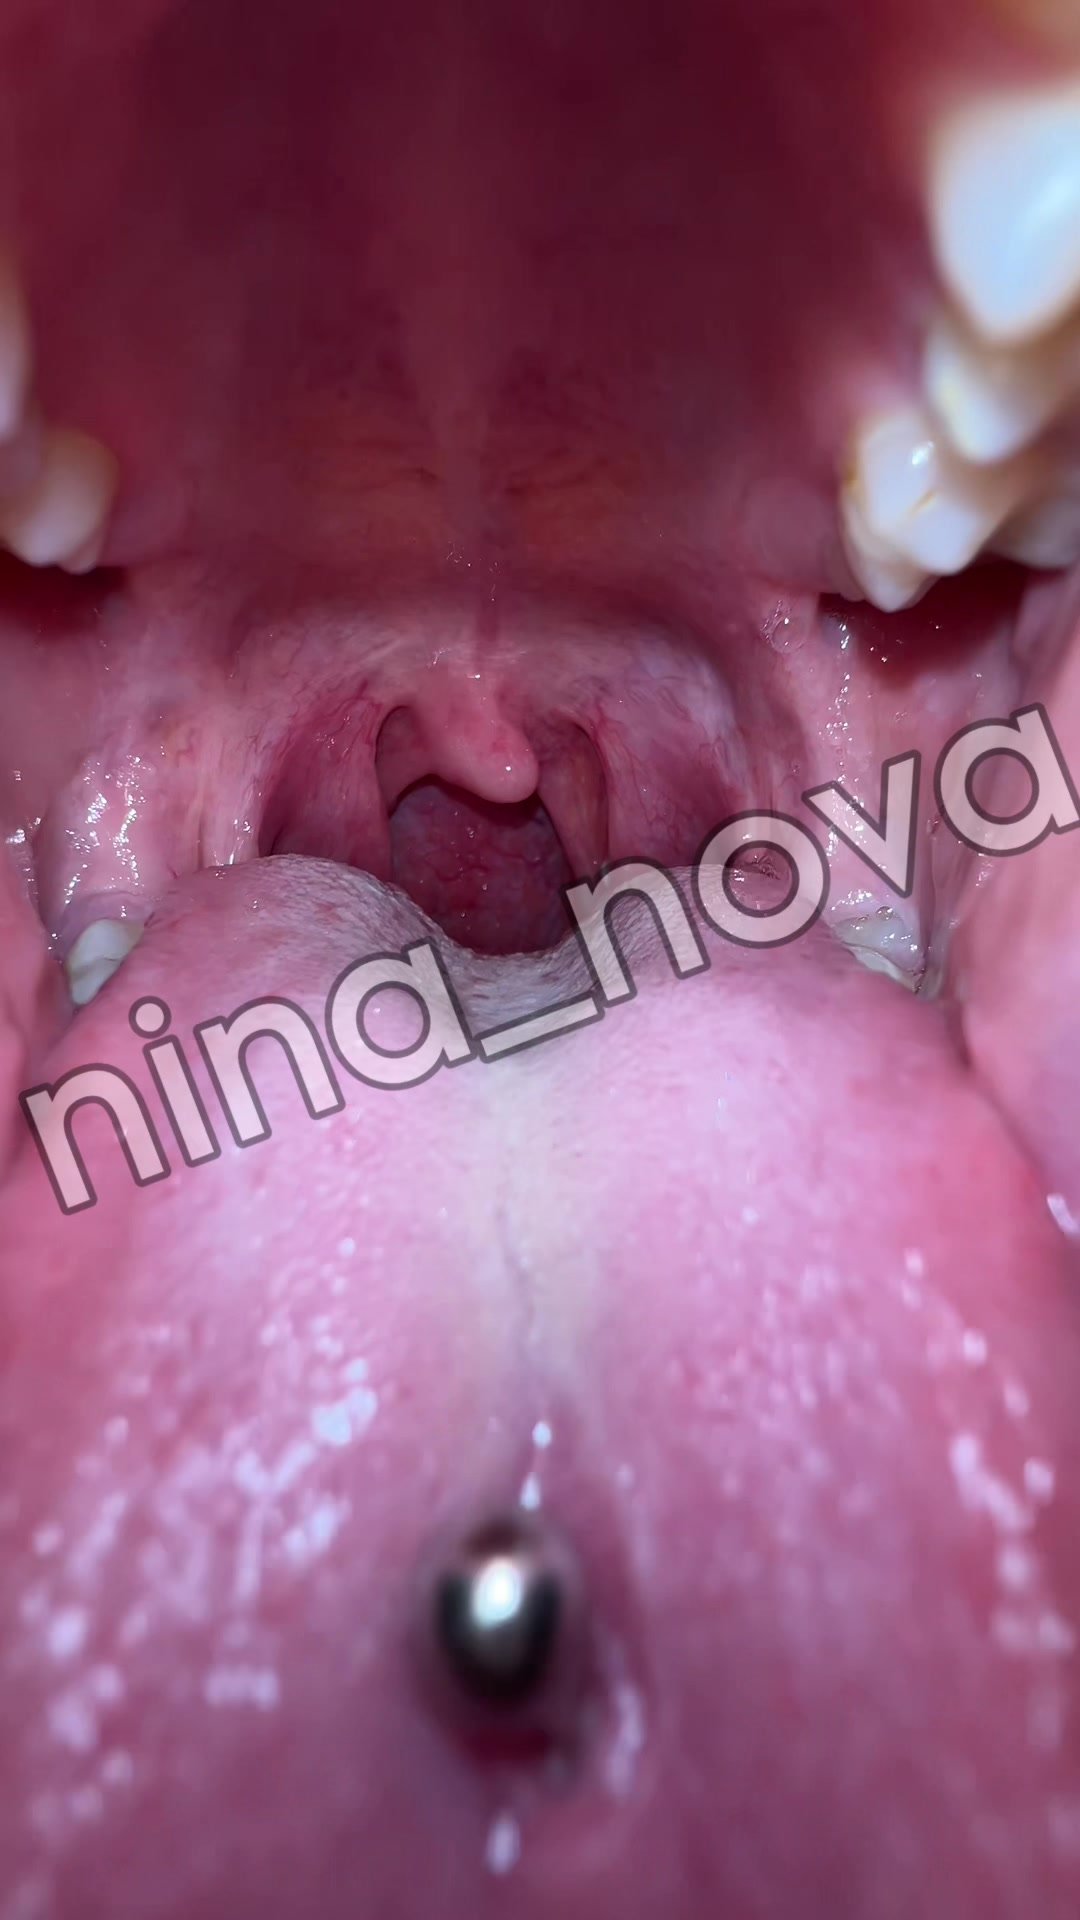 Hot blondie mouth teeth tongue throat uvula